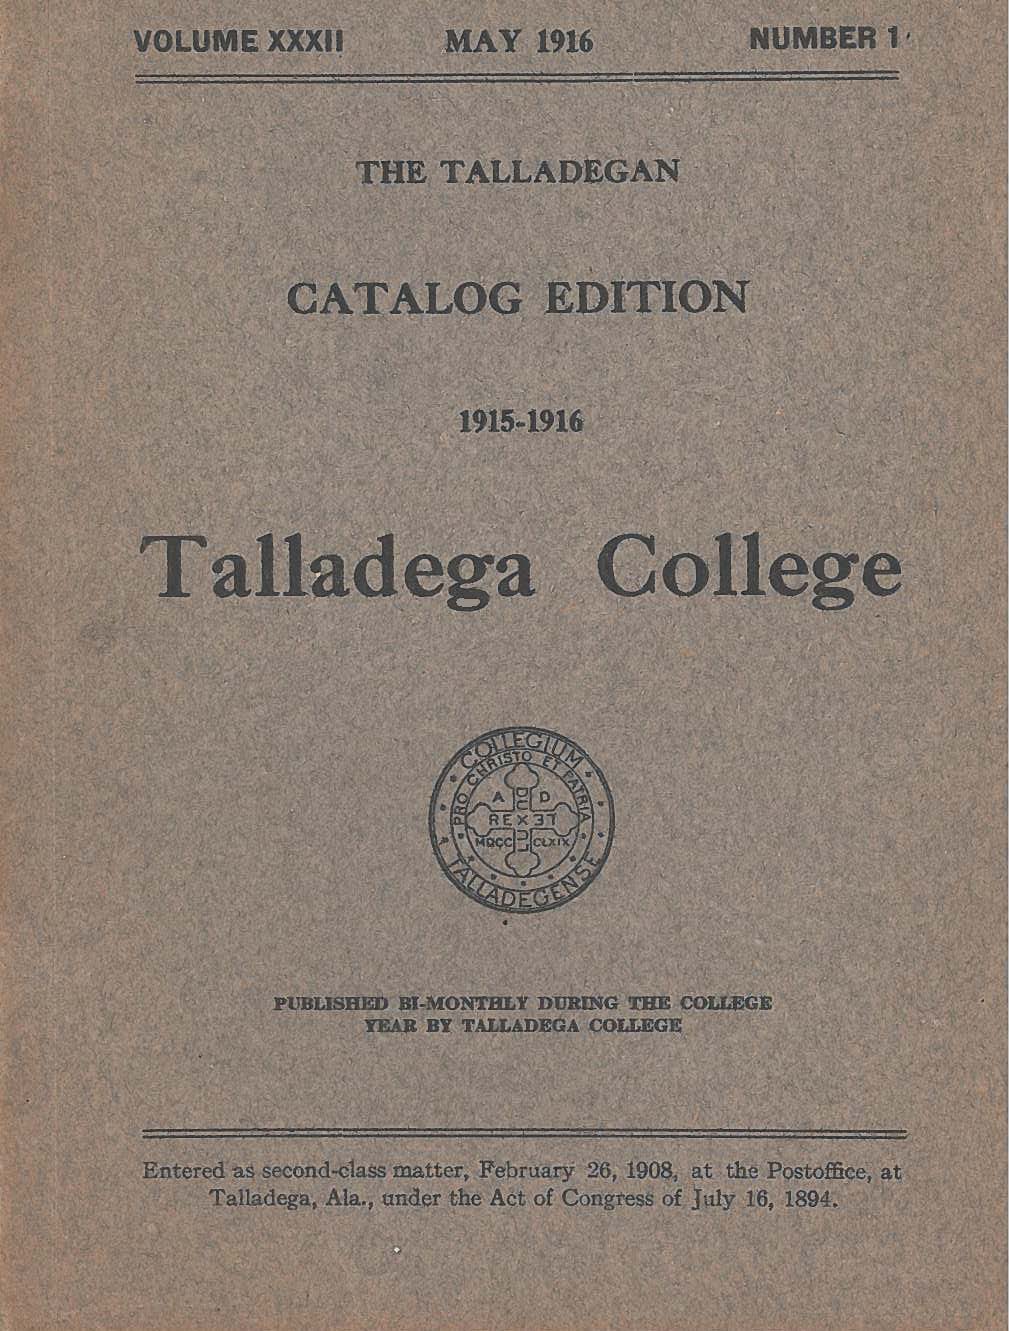 Talladega College Catalog 1915-1916